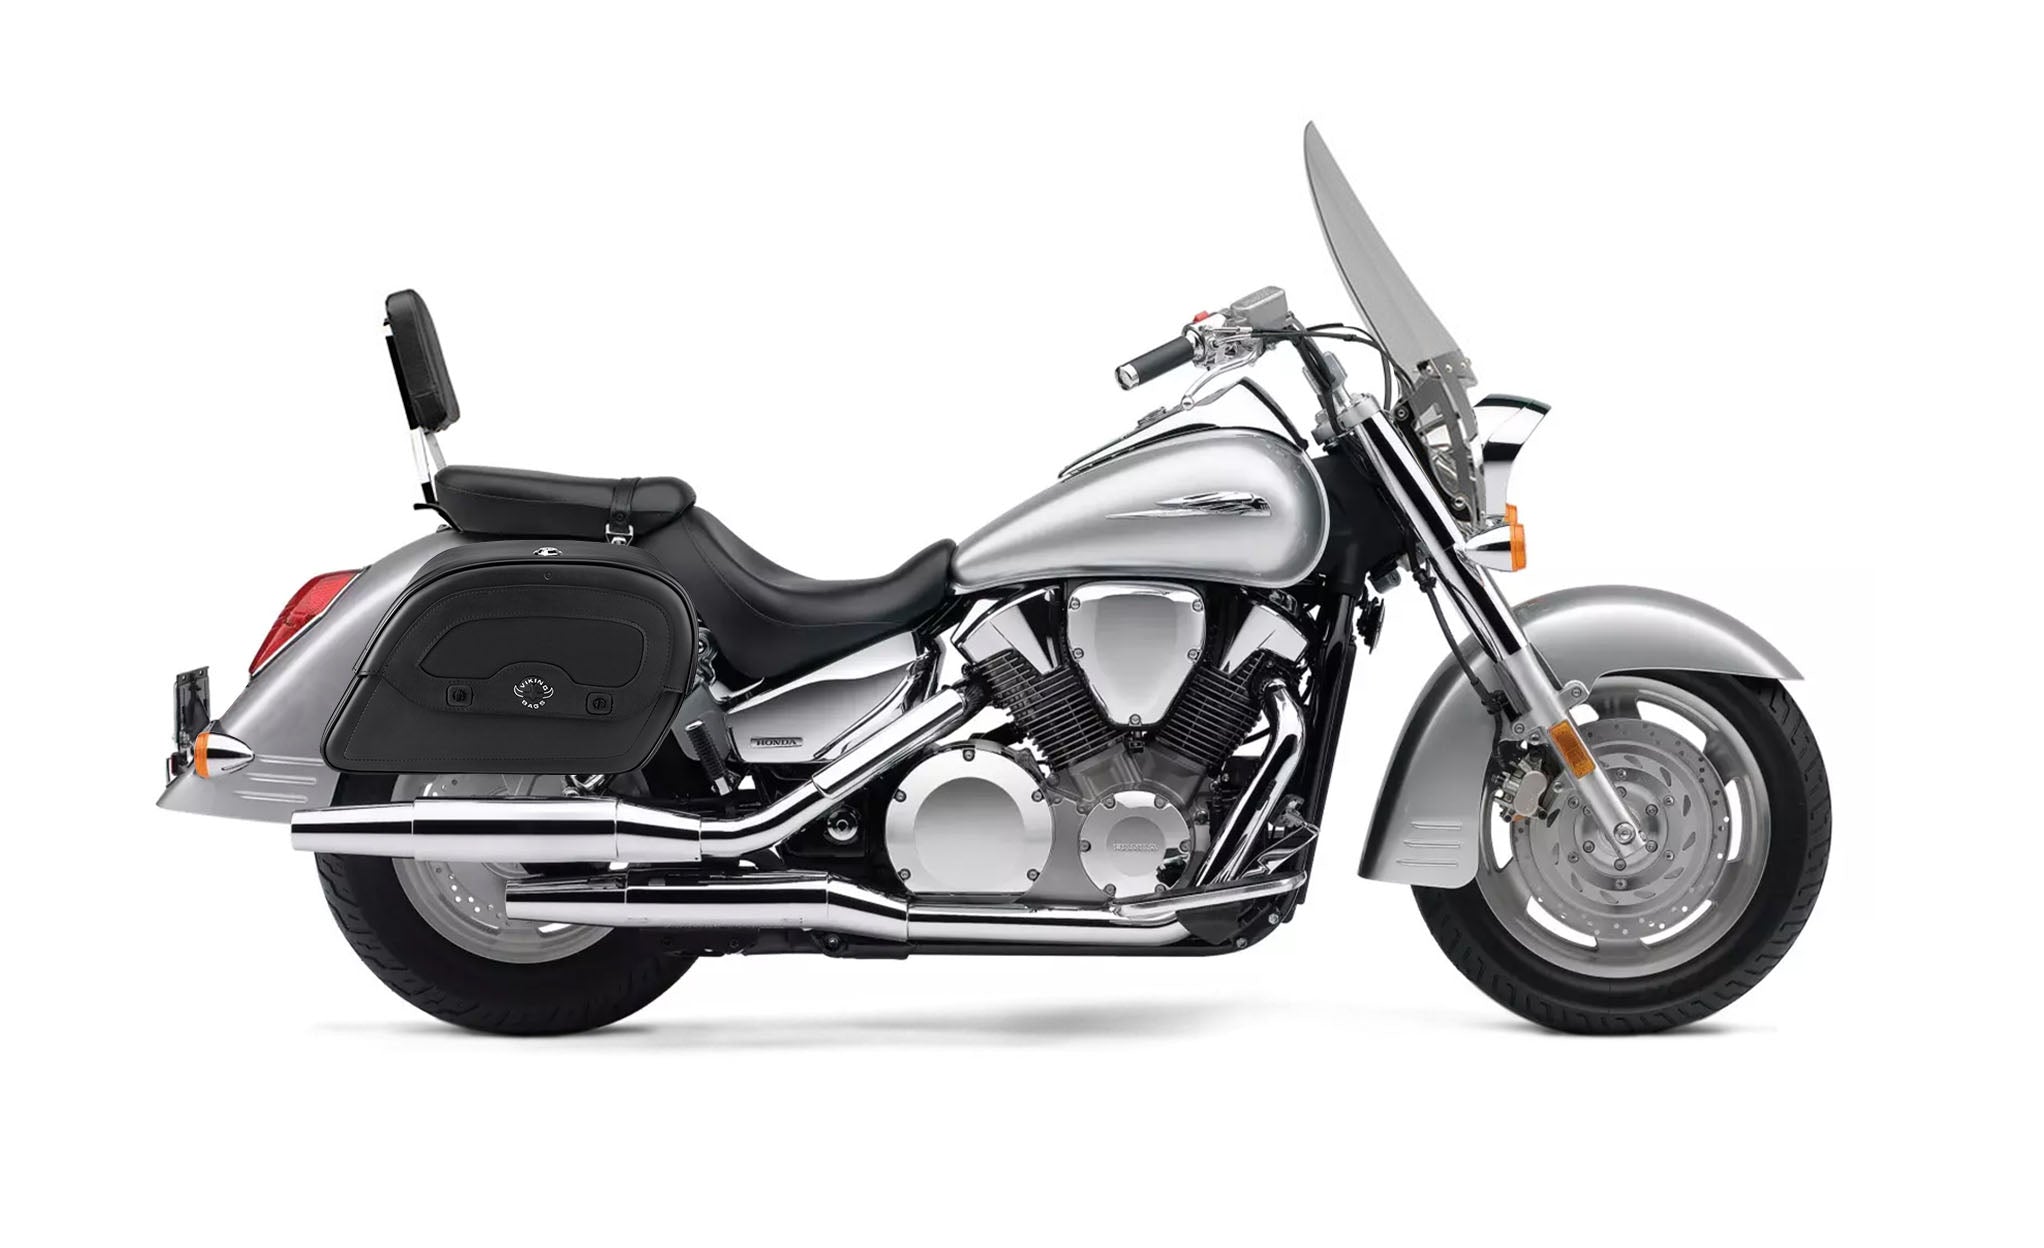 Viking Warrior Large Honda Vtx 1300 T Tourer Shock Cut Out Leather Motorcycle Saddlebags on Bike Photo @expand